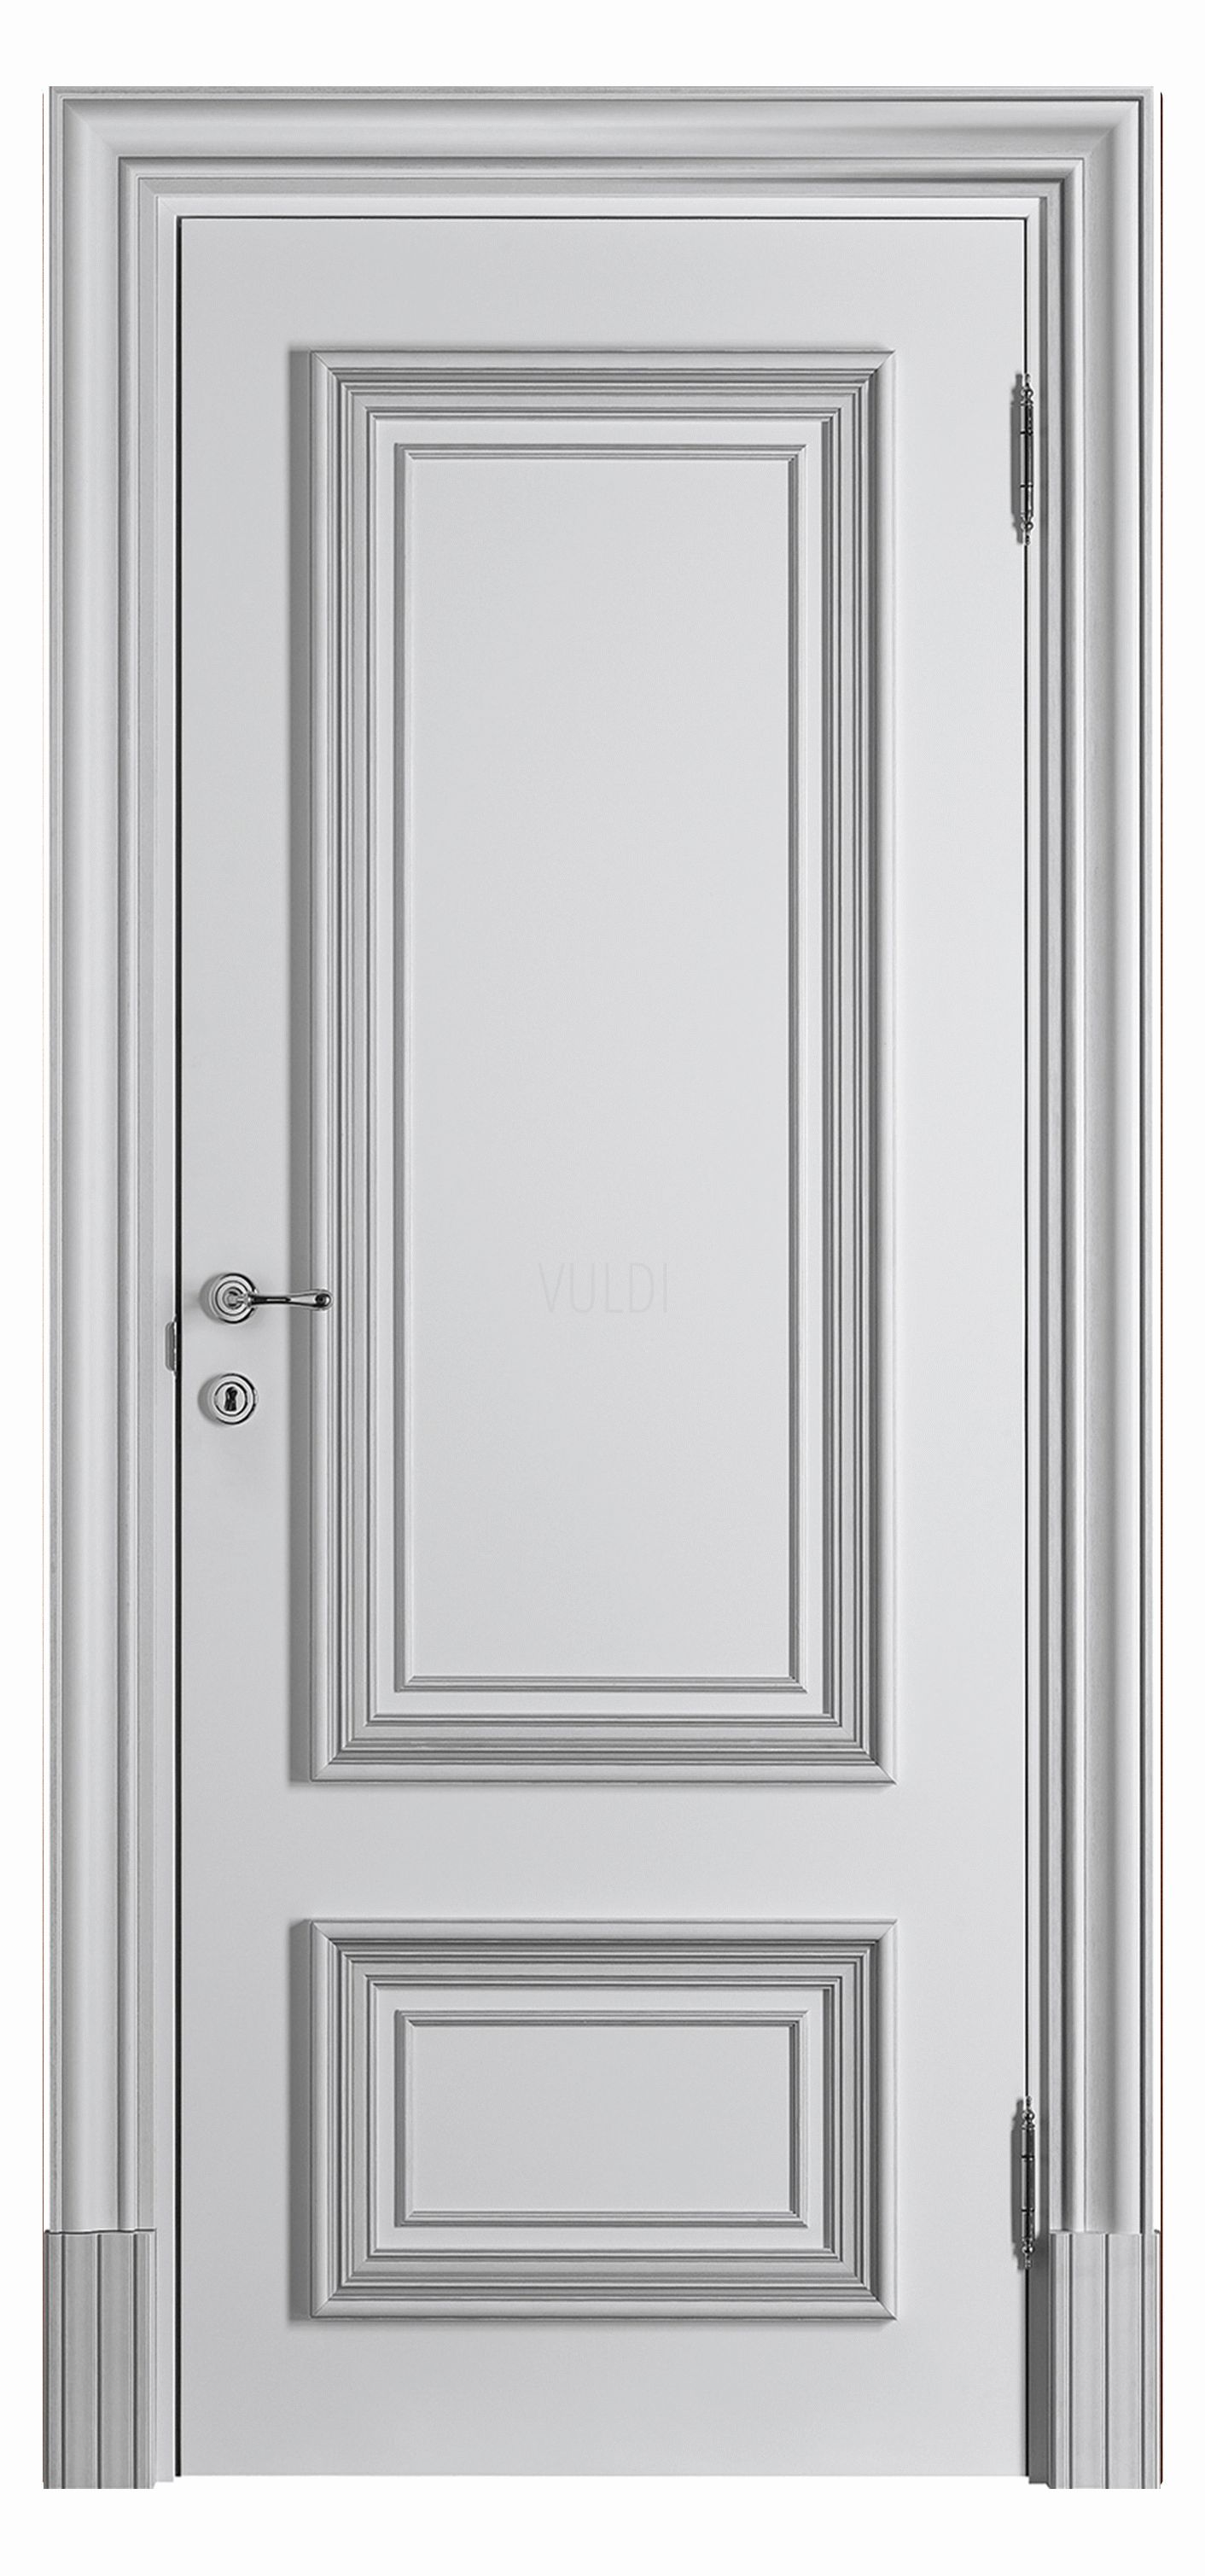  Potenza classico 110 PN Interior Door image from VULDI COMPANY